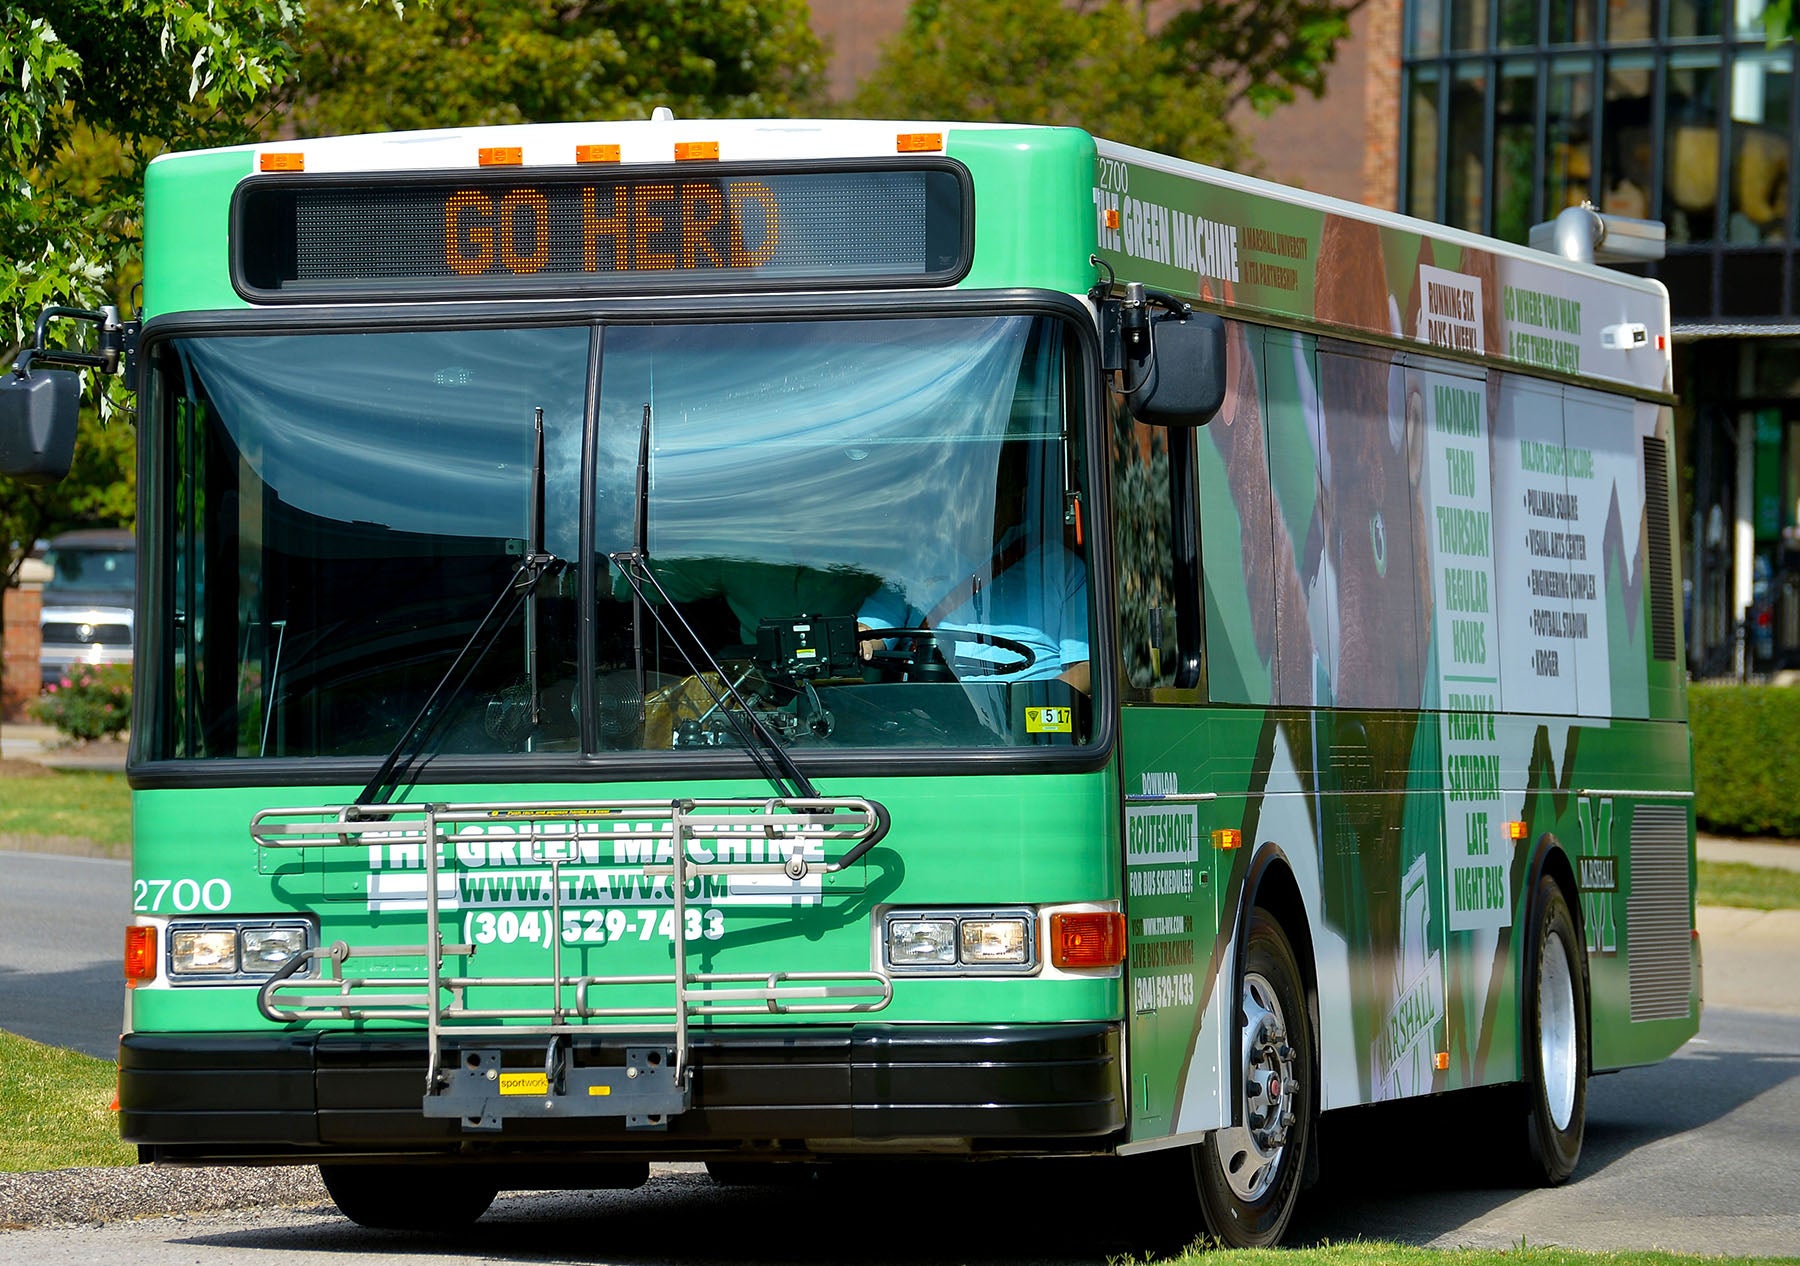 Marshall University has partnered with TTA to provide student transportation via the Green Machine